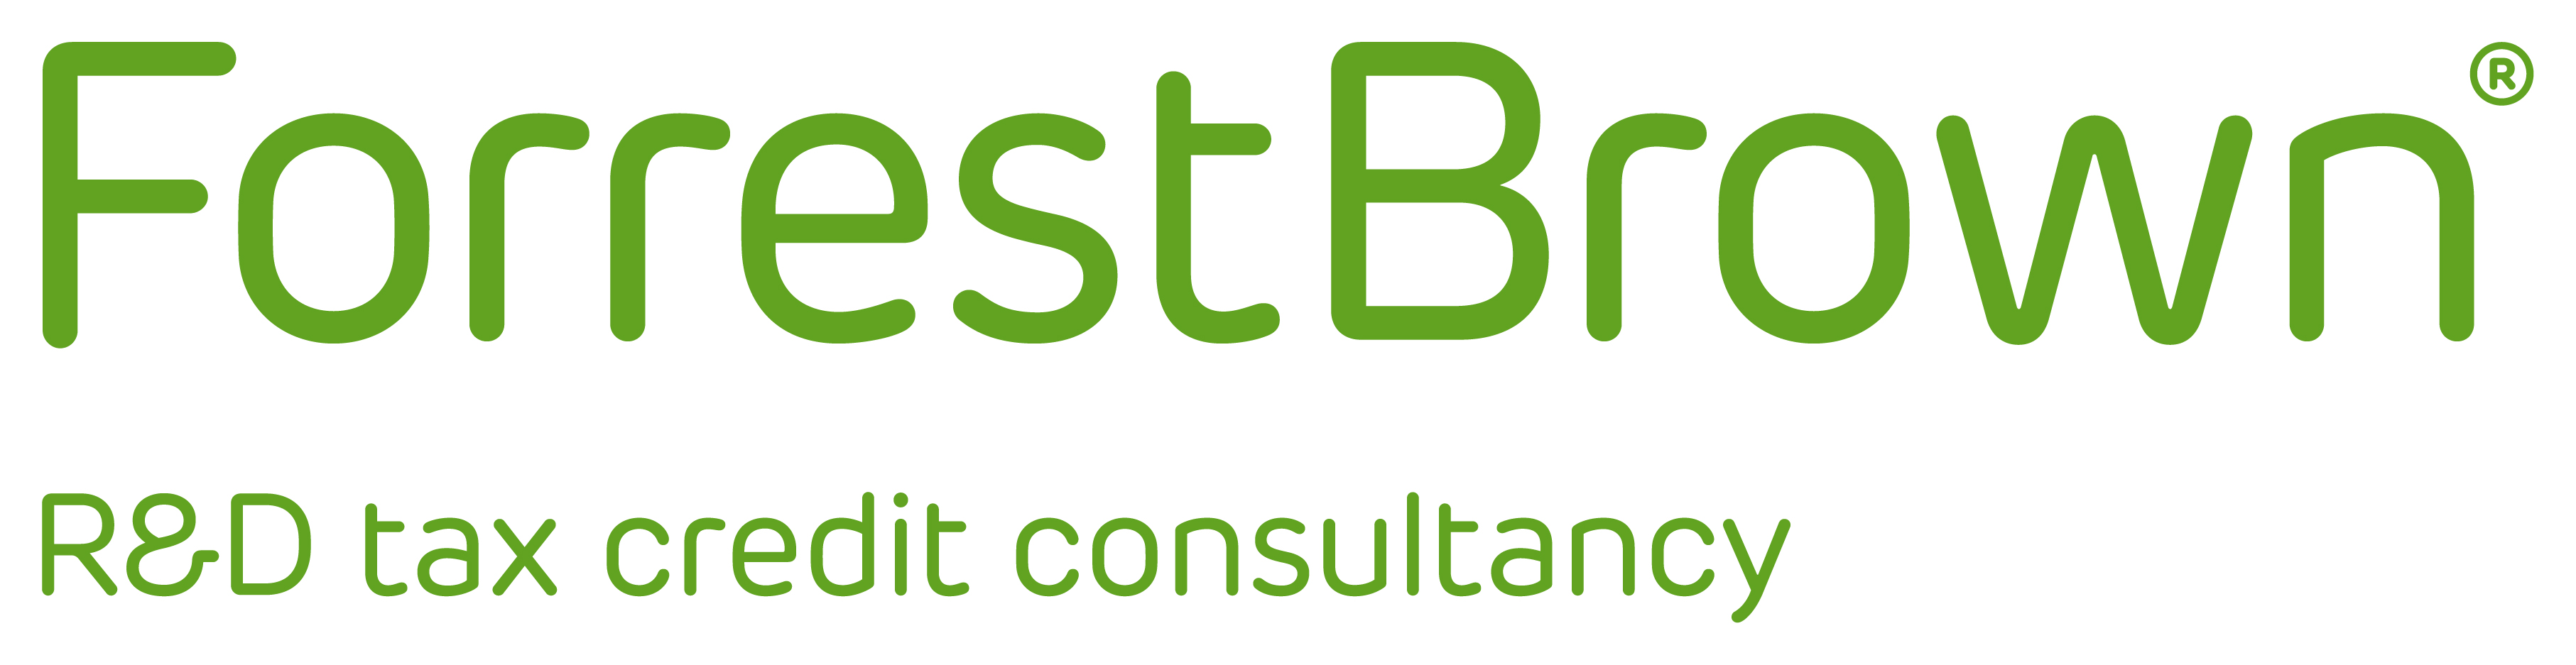 Organisation Logo - ForrestBrown Limited